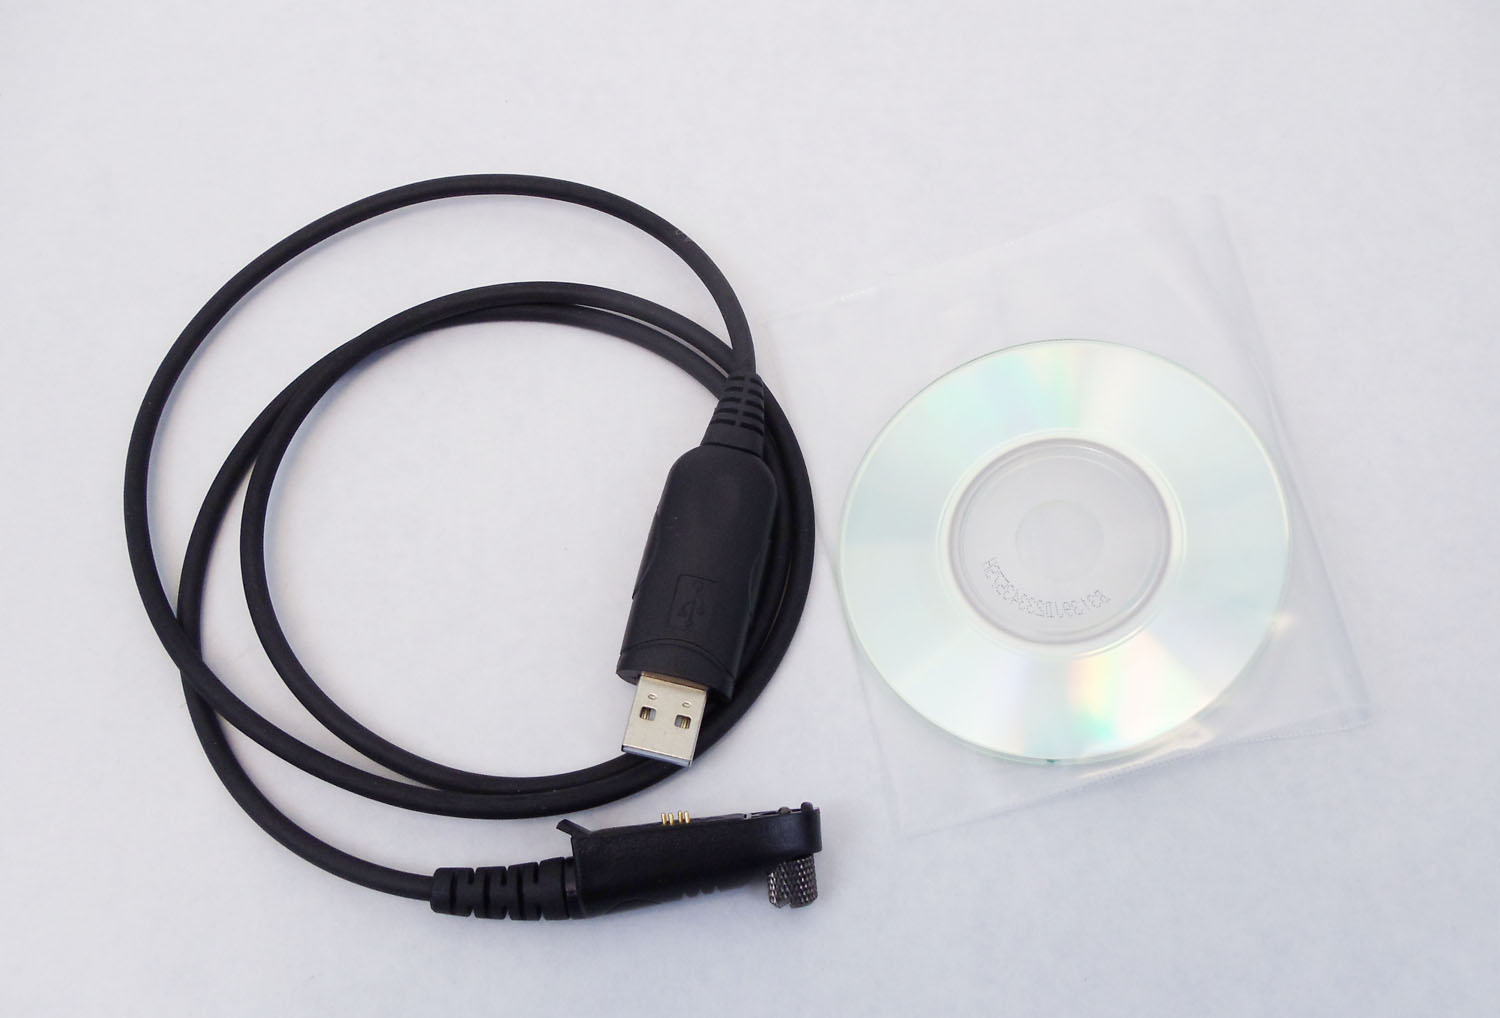 BLACKBOX  - PROGRAMING DISC AND CABLE FOR THE BLACKBOXSEAL RADIO